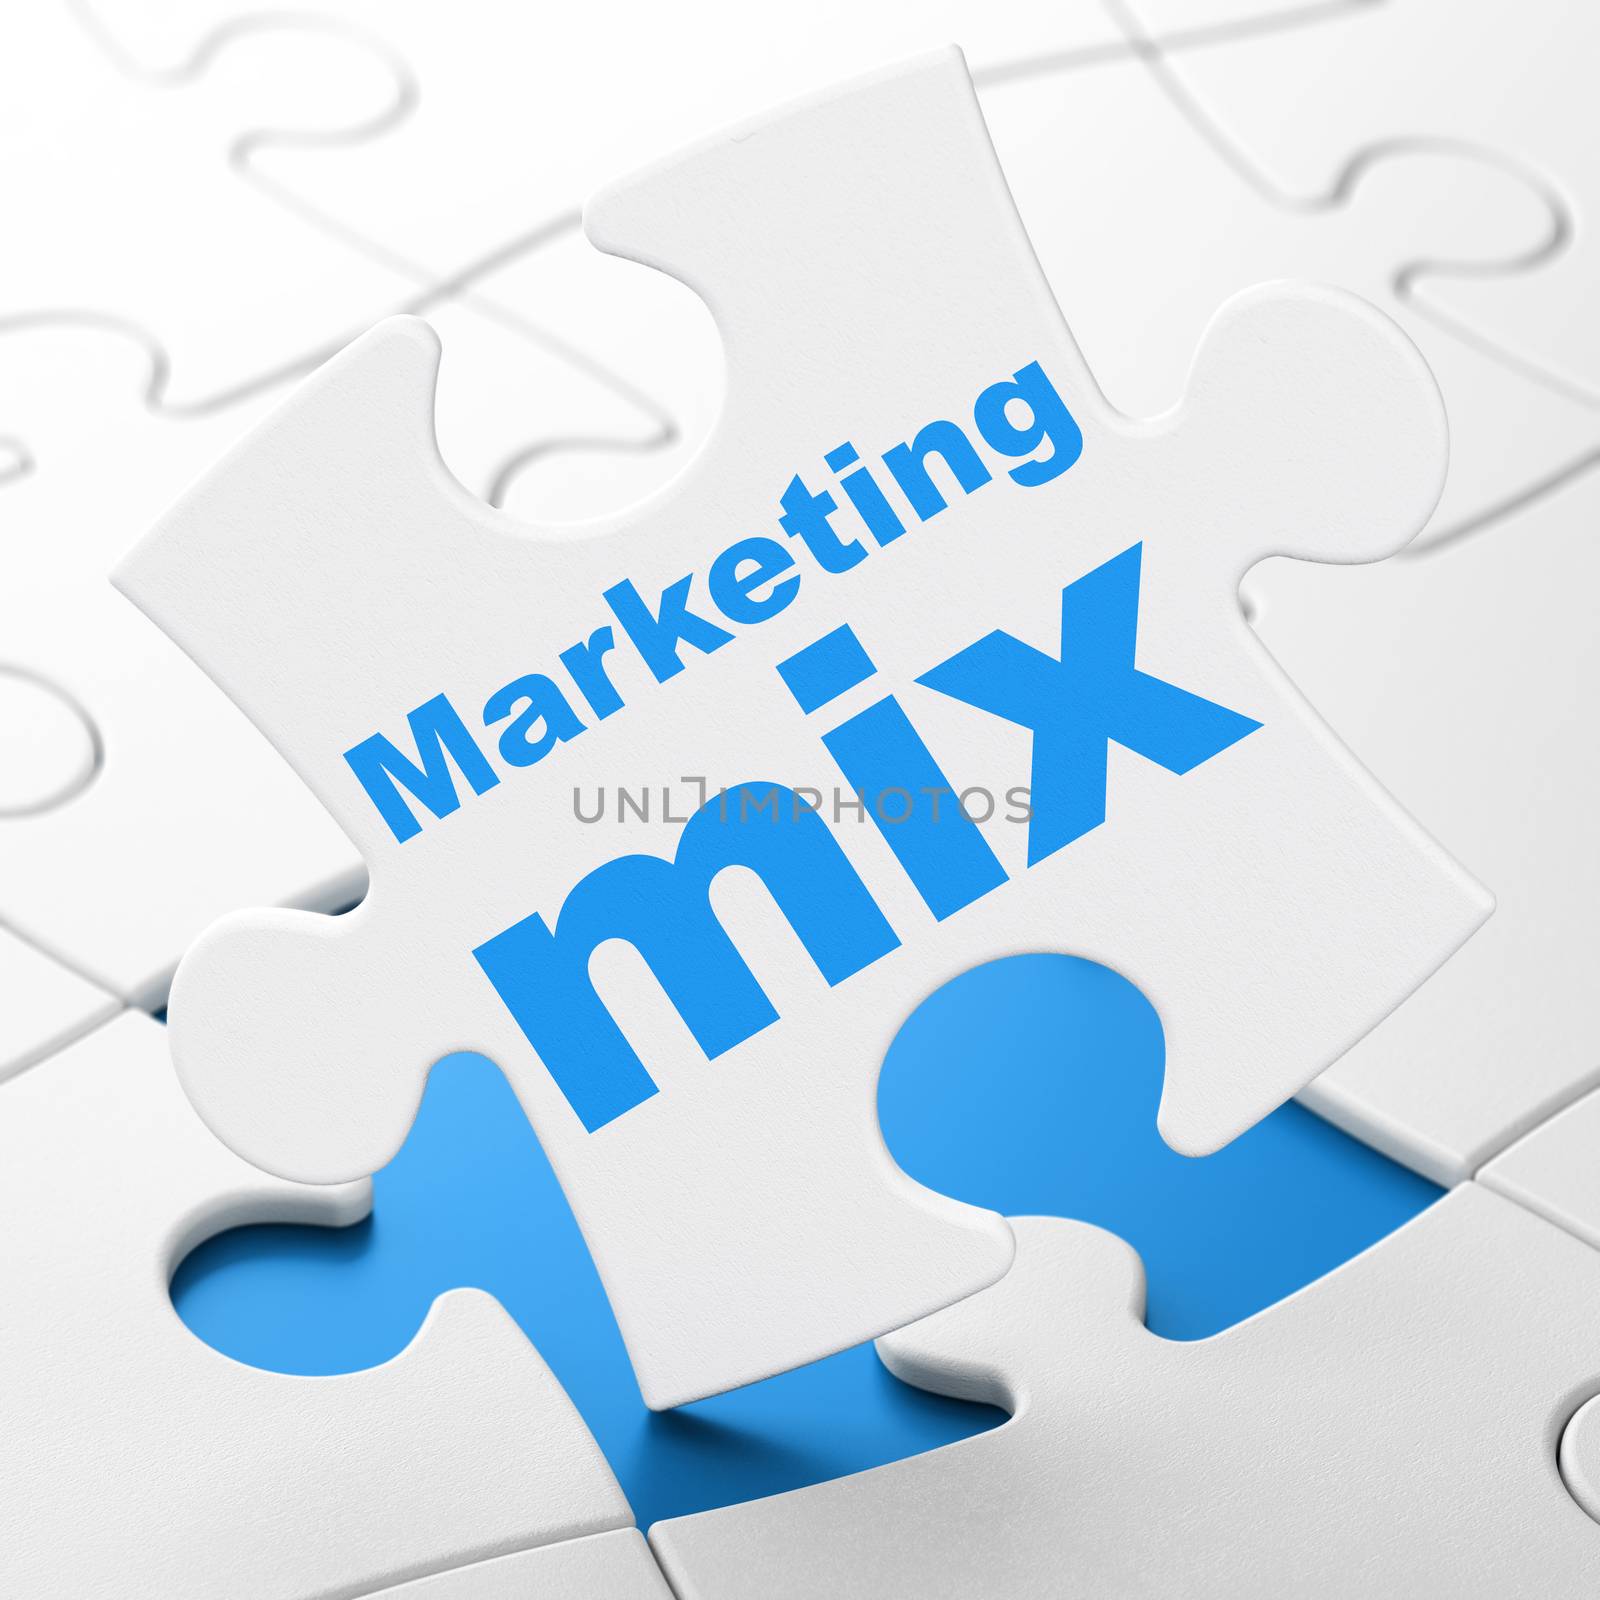 Marketing concept: Marketing Mix on puzzle background by maxkabakov